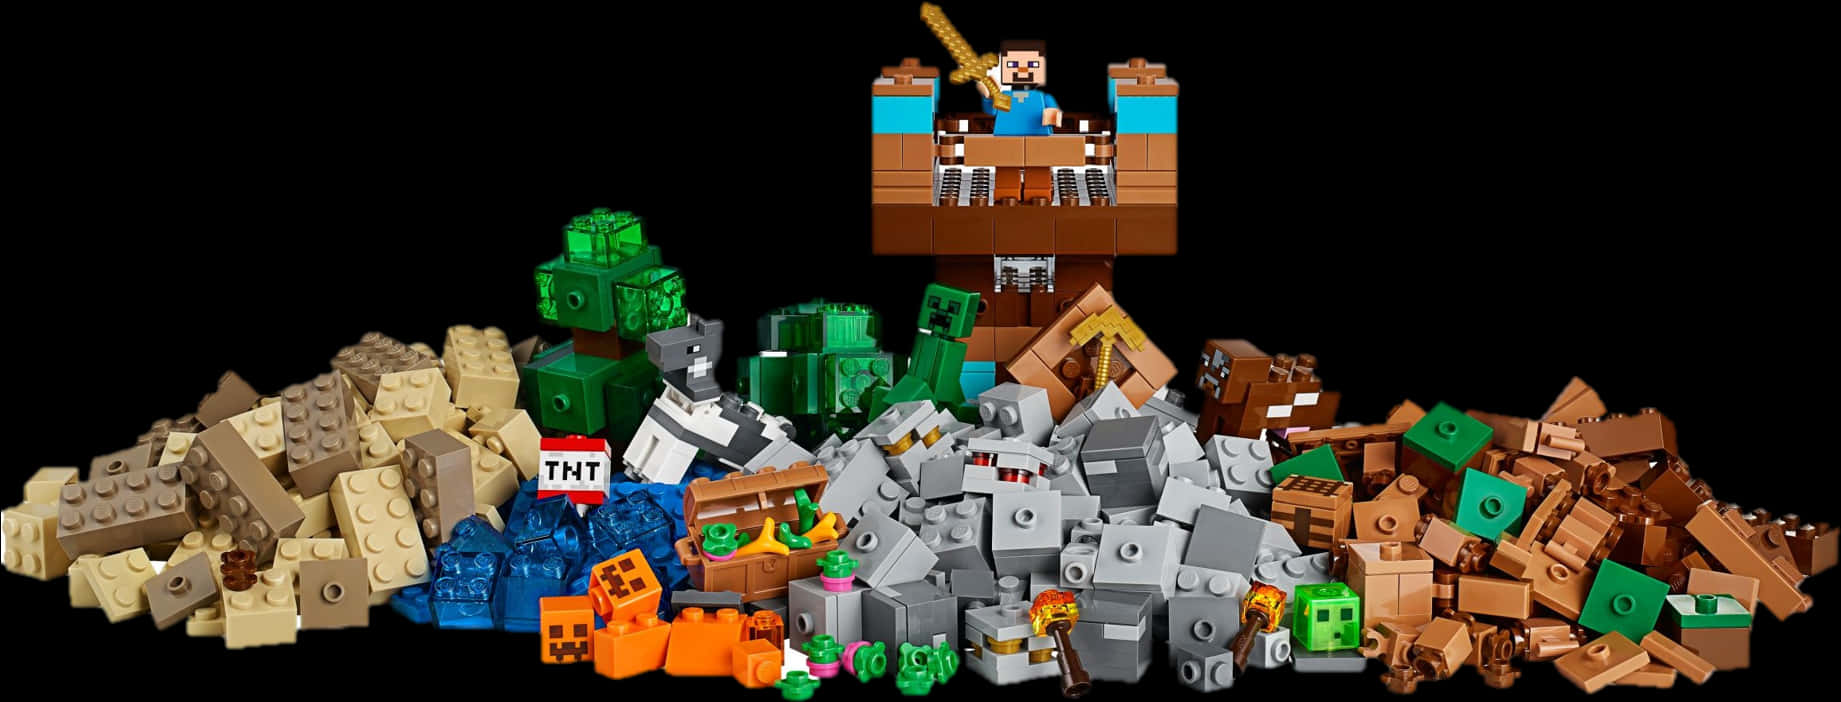 A Pile Of Lego Blocks